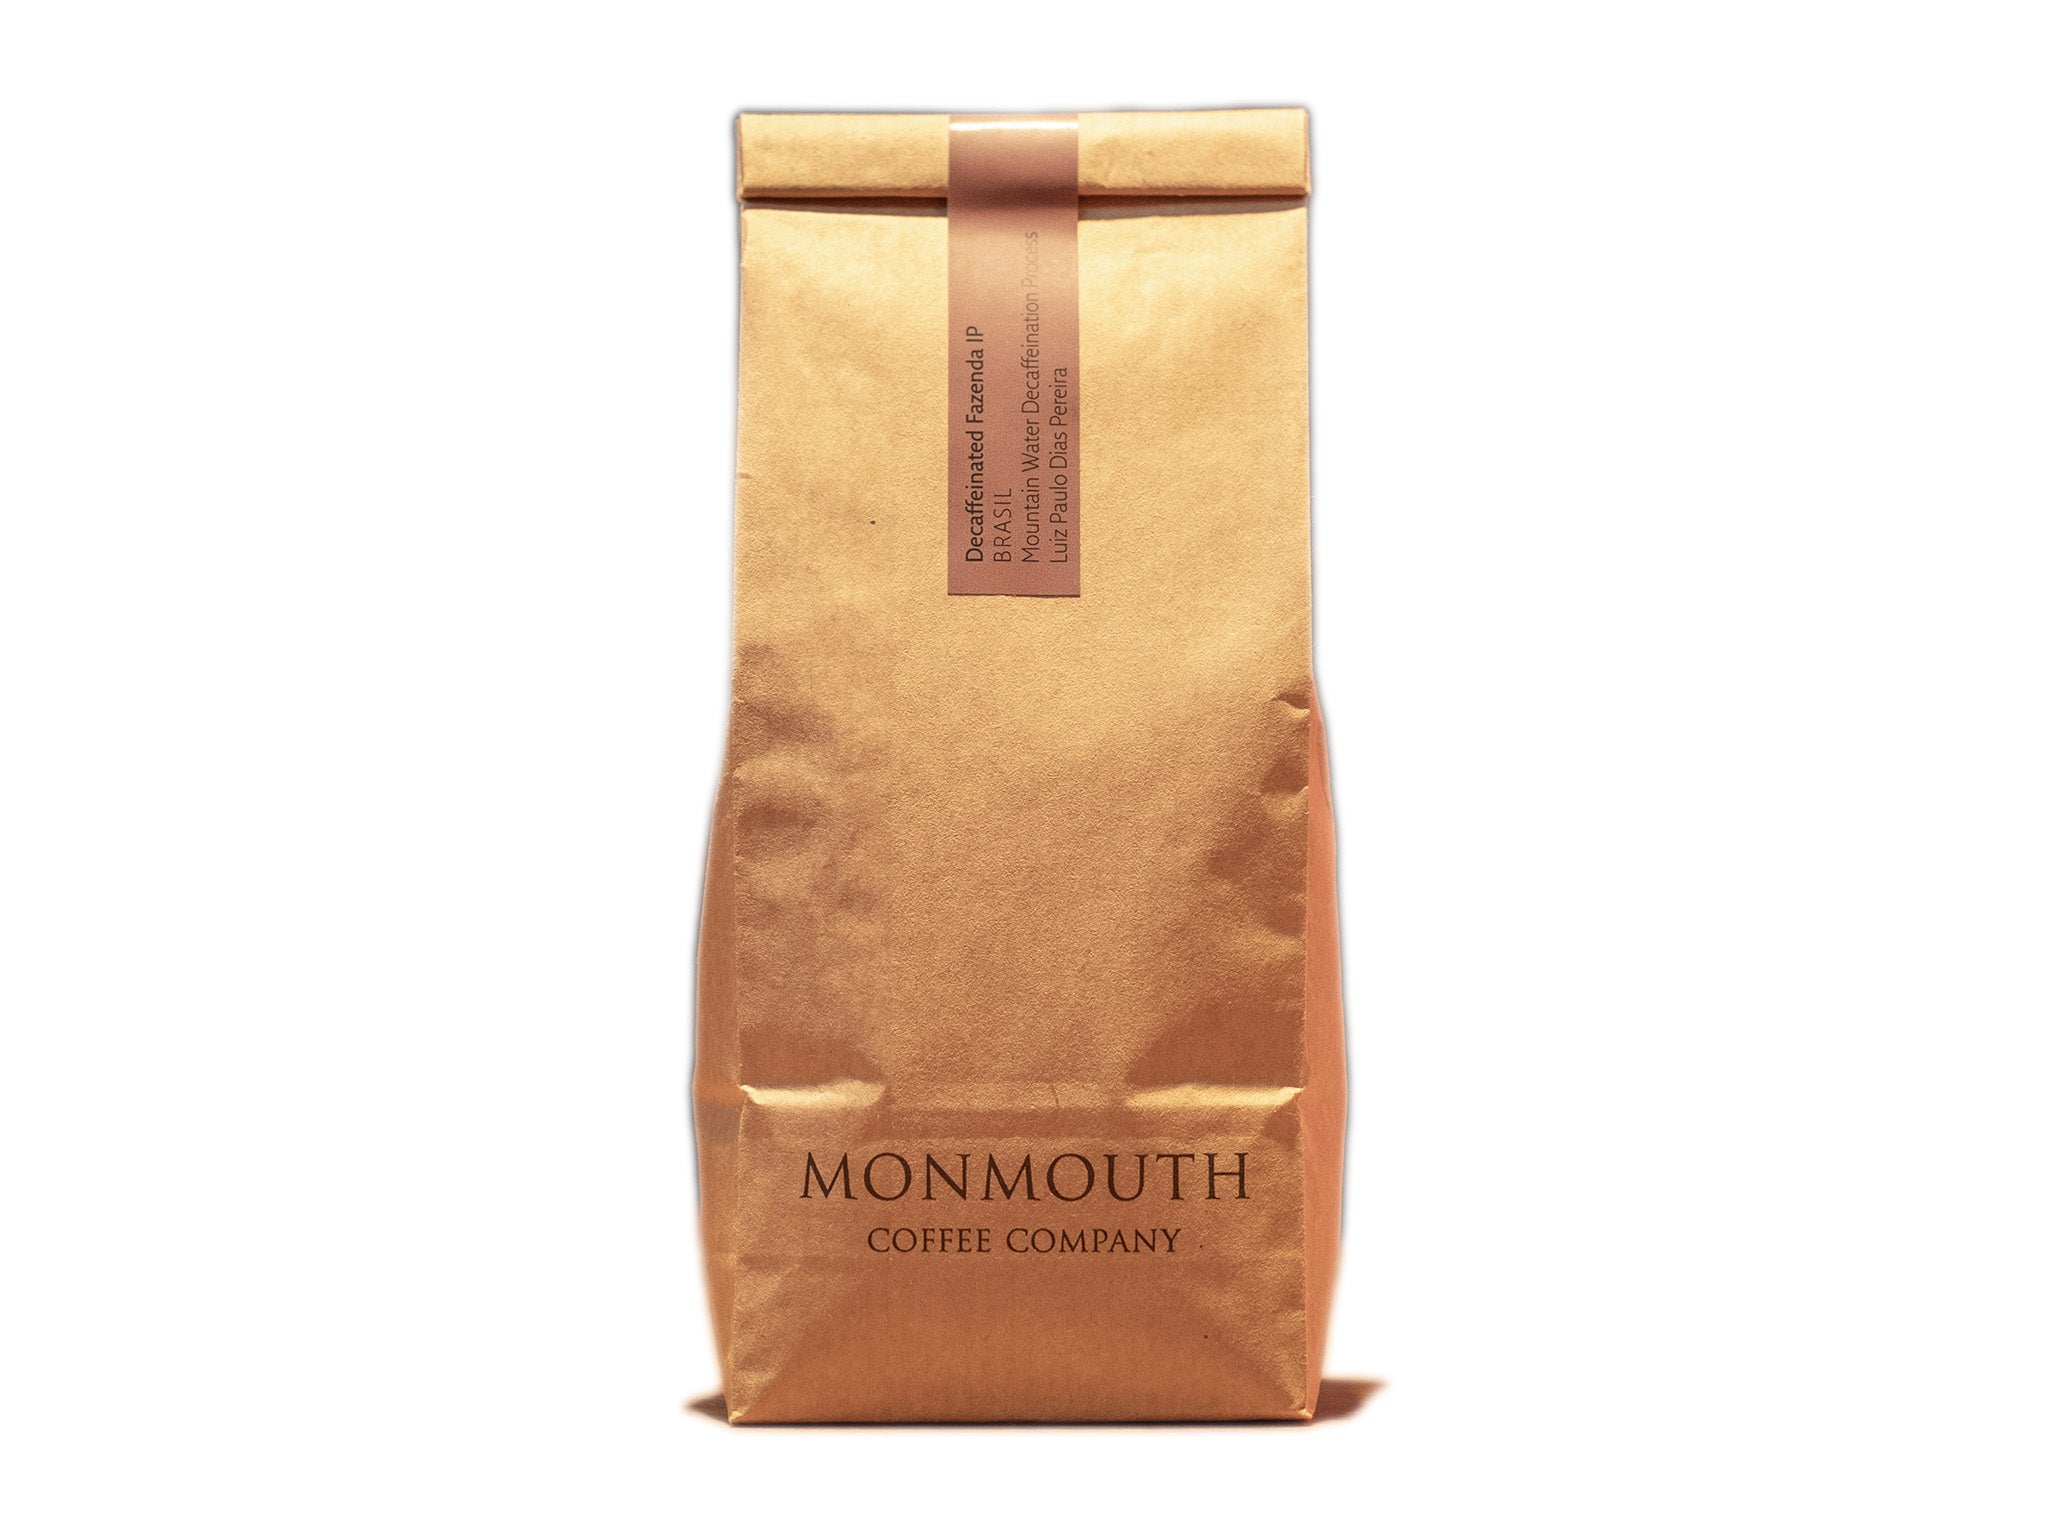 Monmouth Coffee Company finca la bolsa decaf